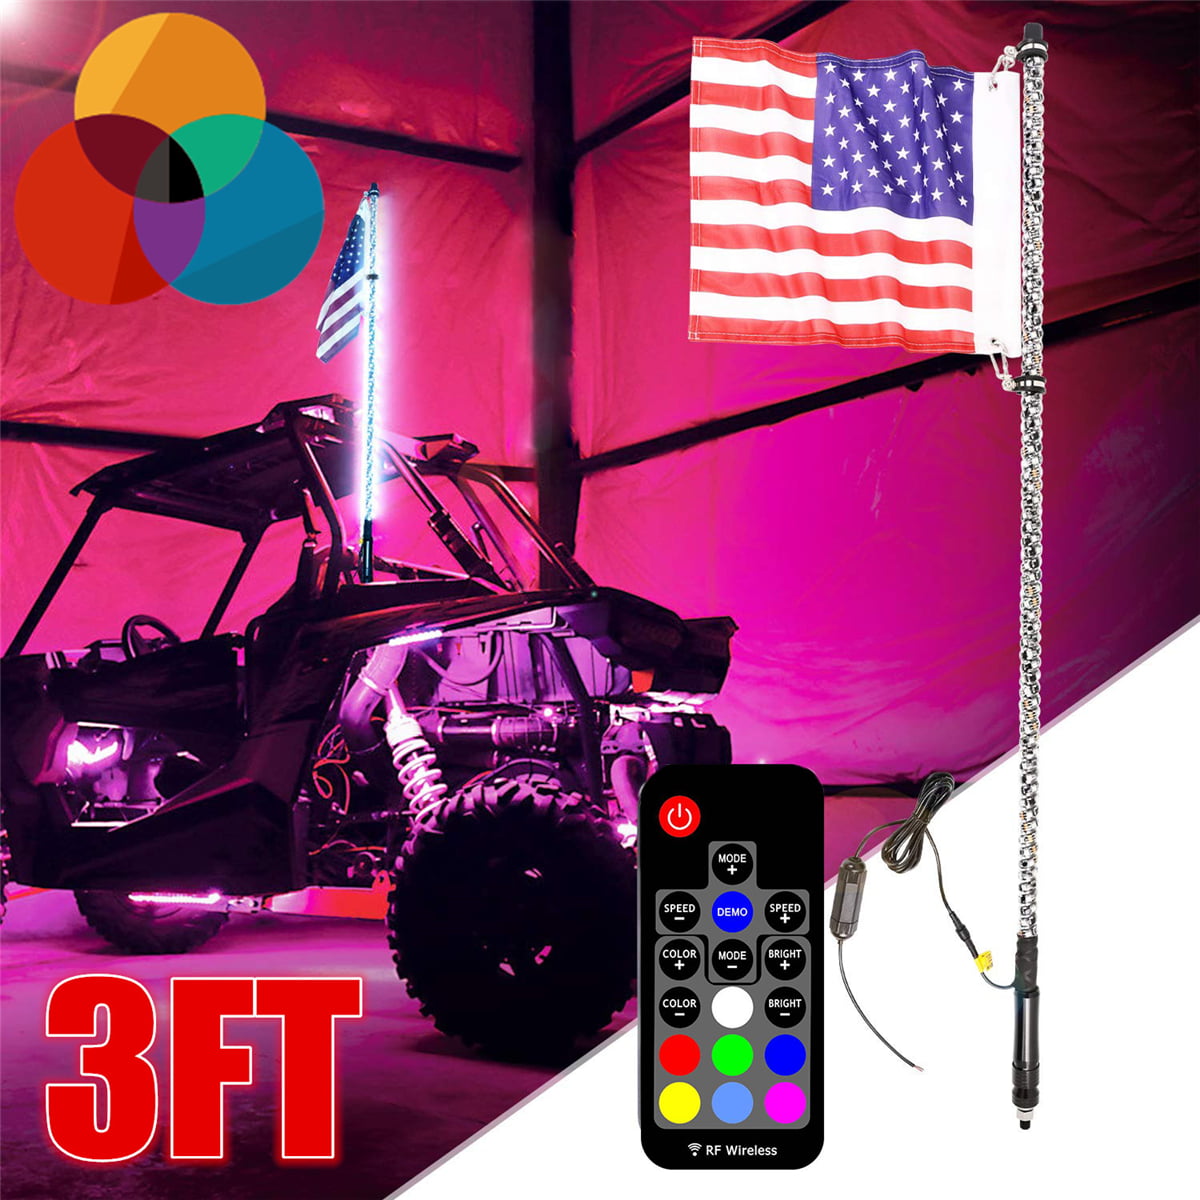 Details about  / ✈Pair 3ft RGB LED Spiral Whip Lights Antenna Chase 2 Flag /& Remote for ATV UTV